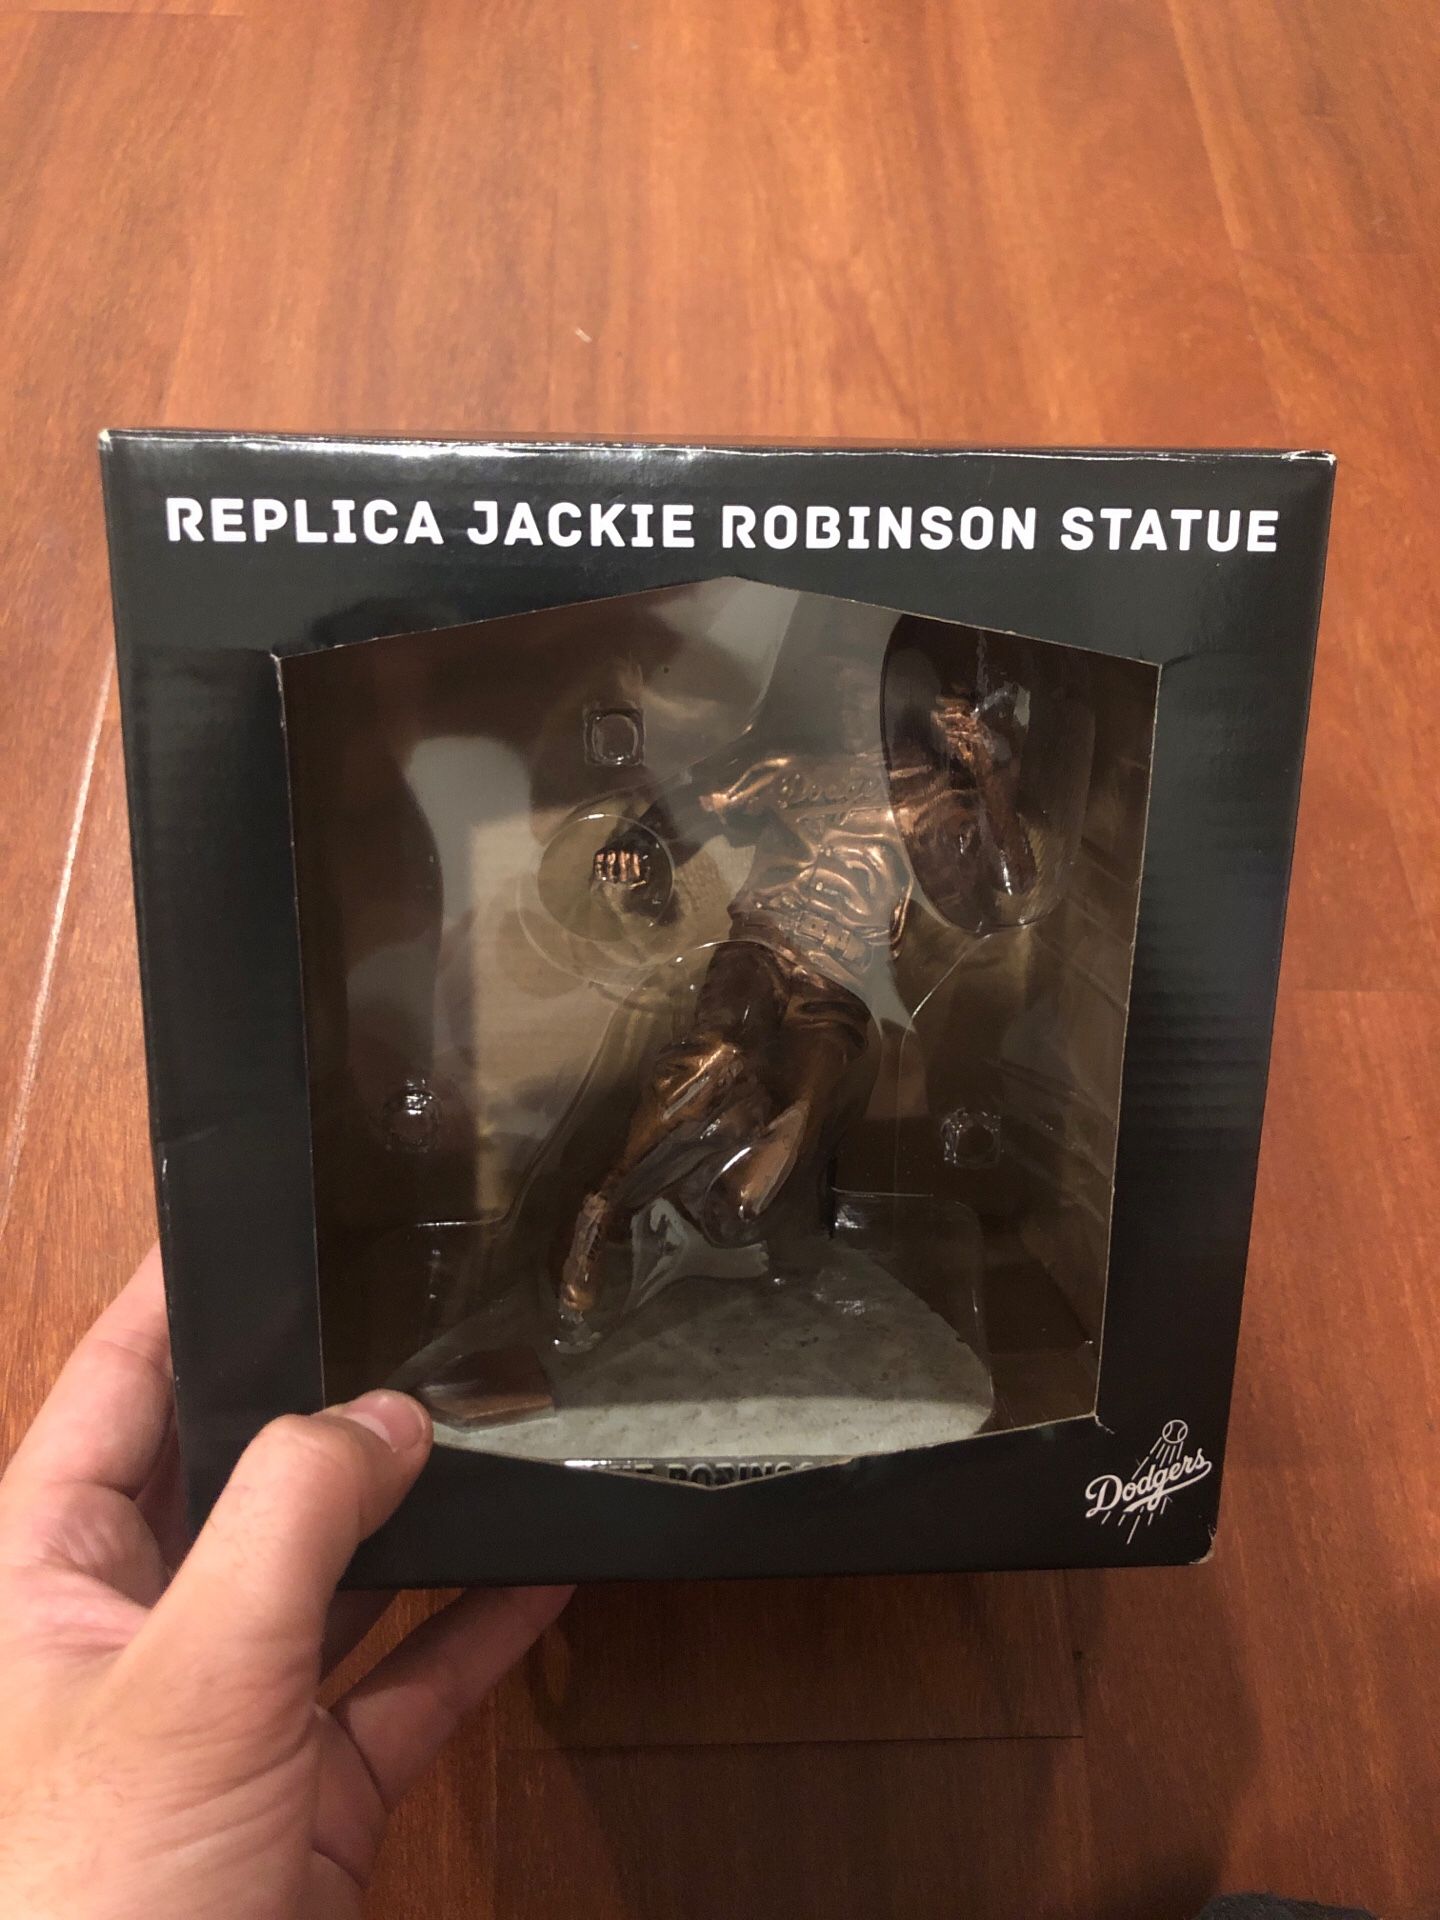 Jackie Robinson replica statue